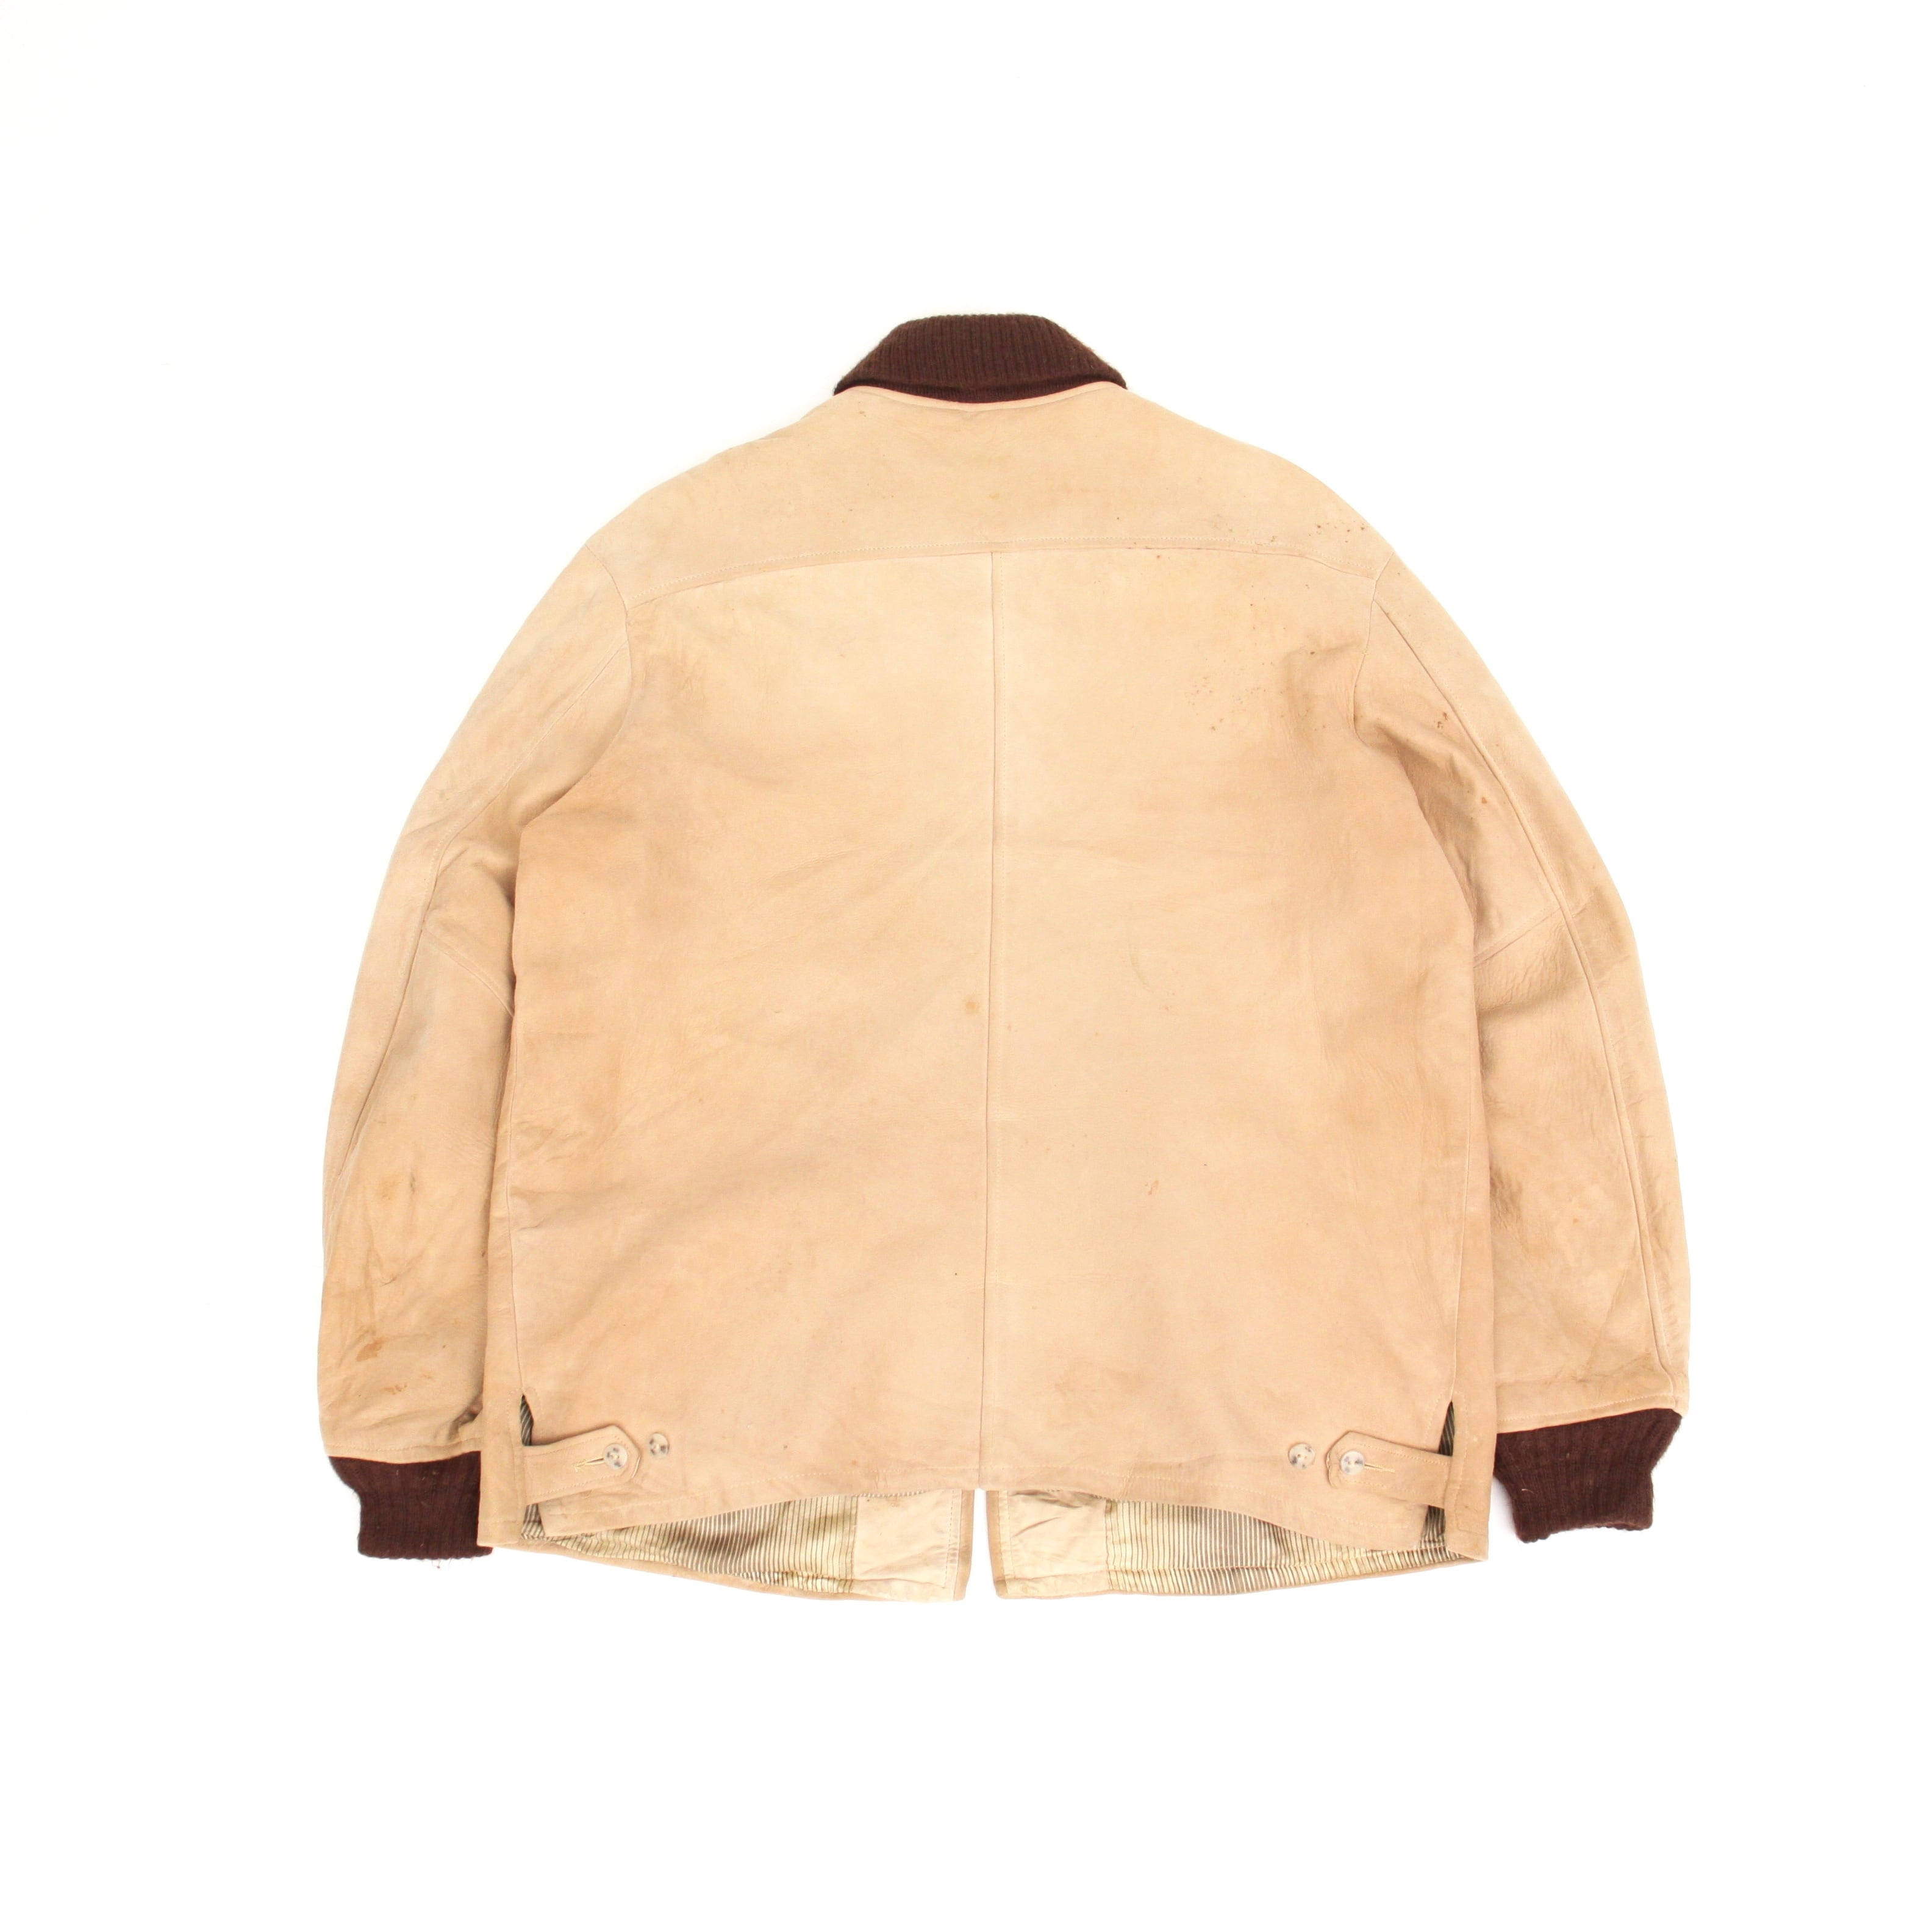 0101. 1960's mcgregor suede leather coat 60s 60年代 マクレガー